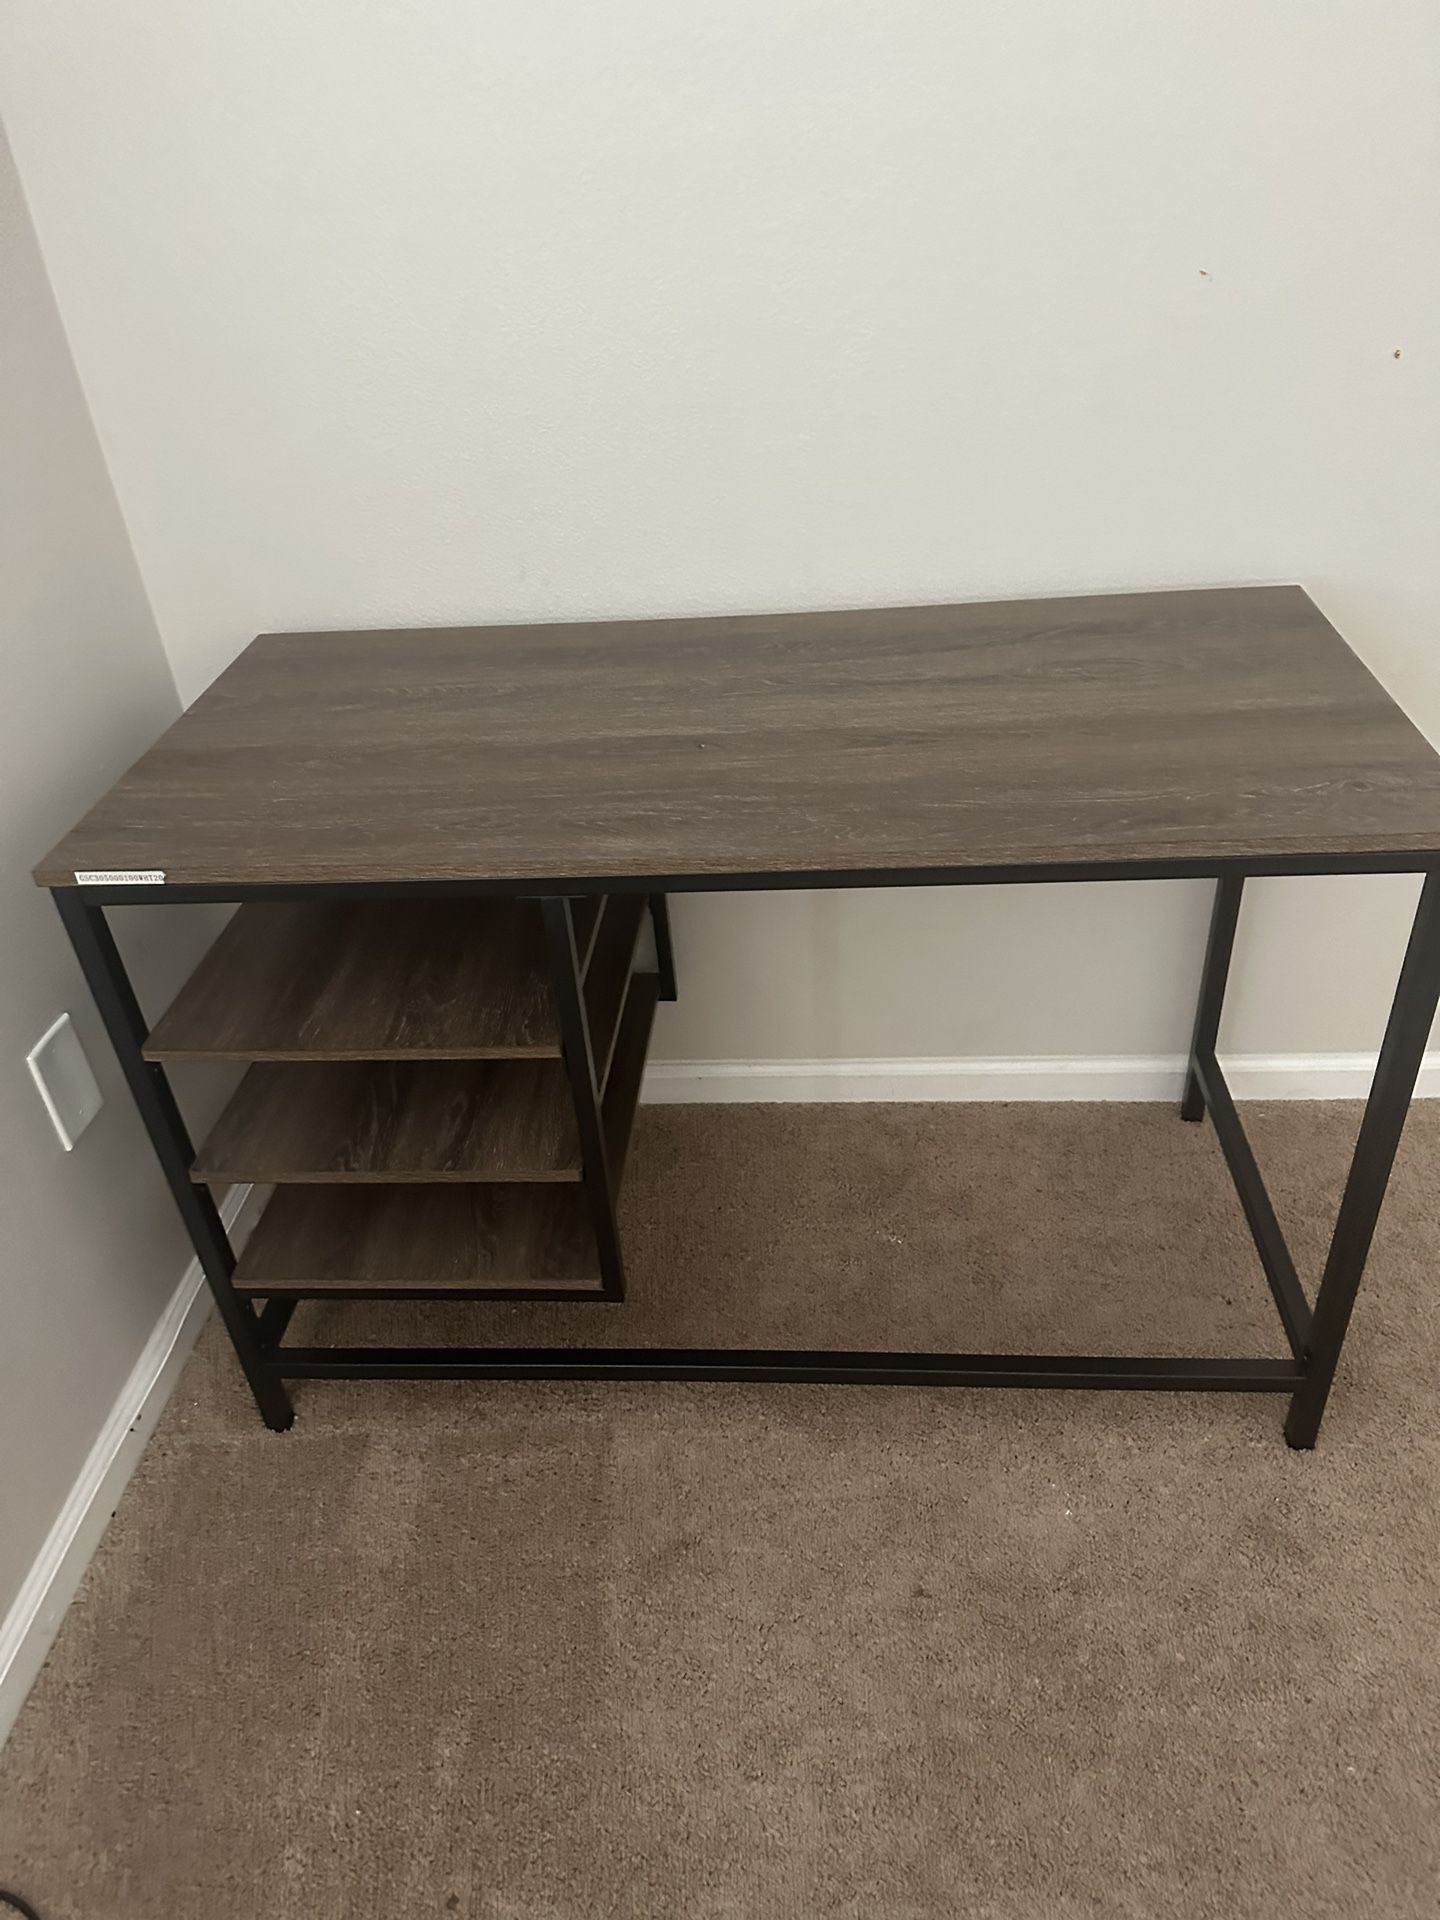 Brand New Desk 